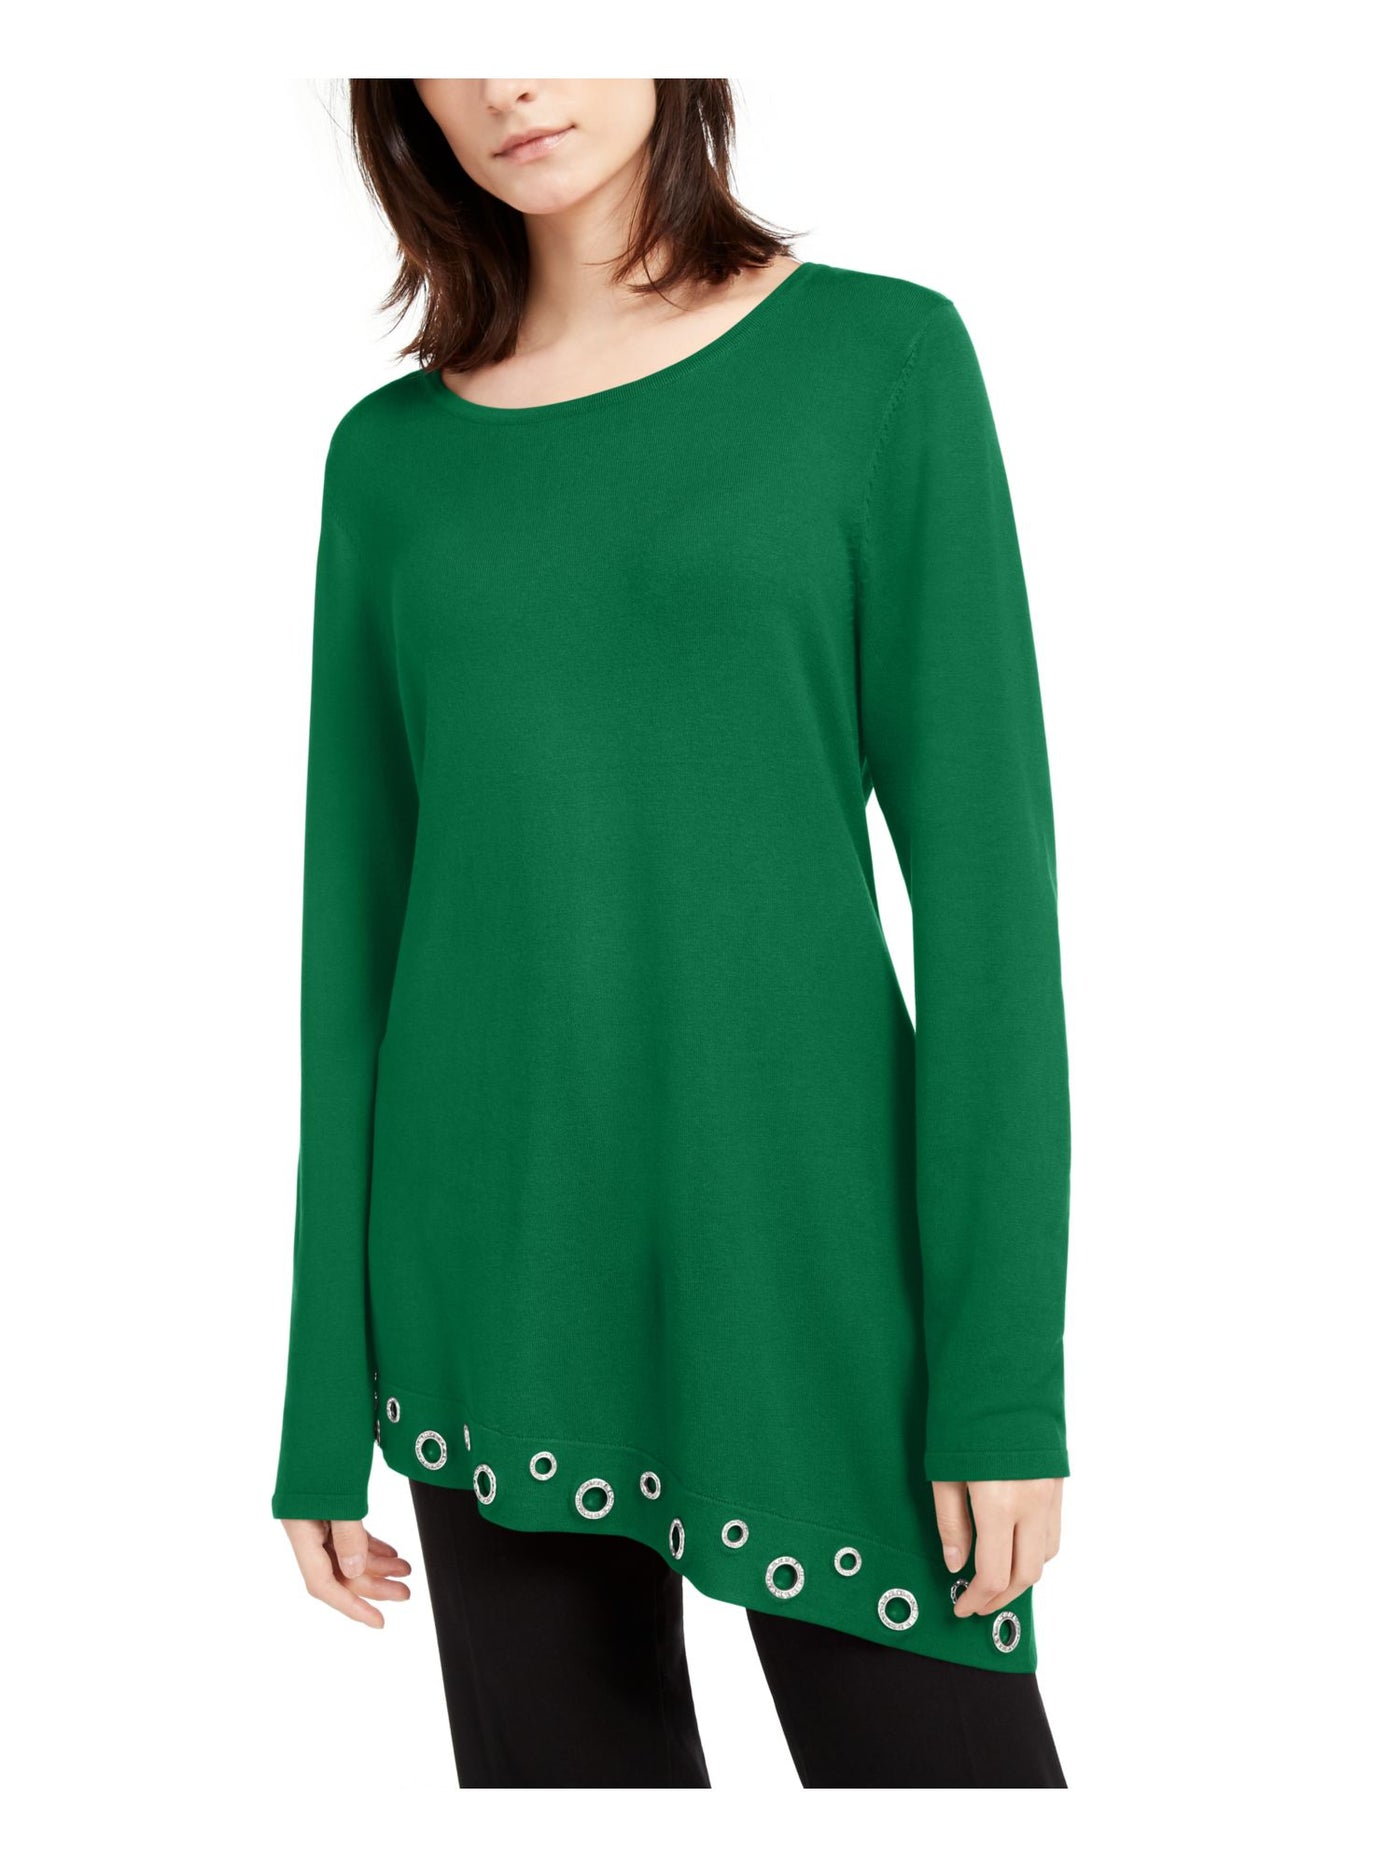 INC Womens Green Embellished Long Sleeve Jewel Neck Top S